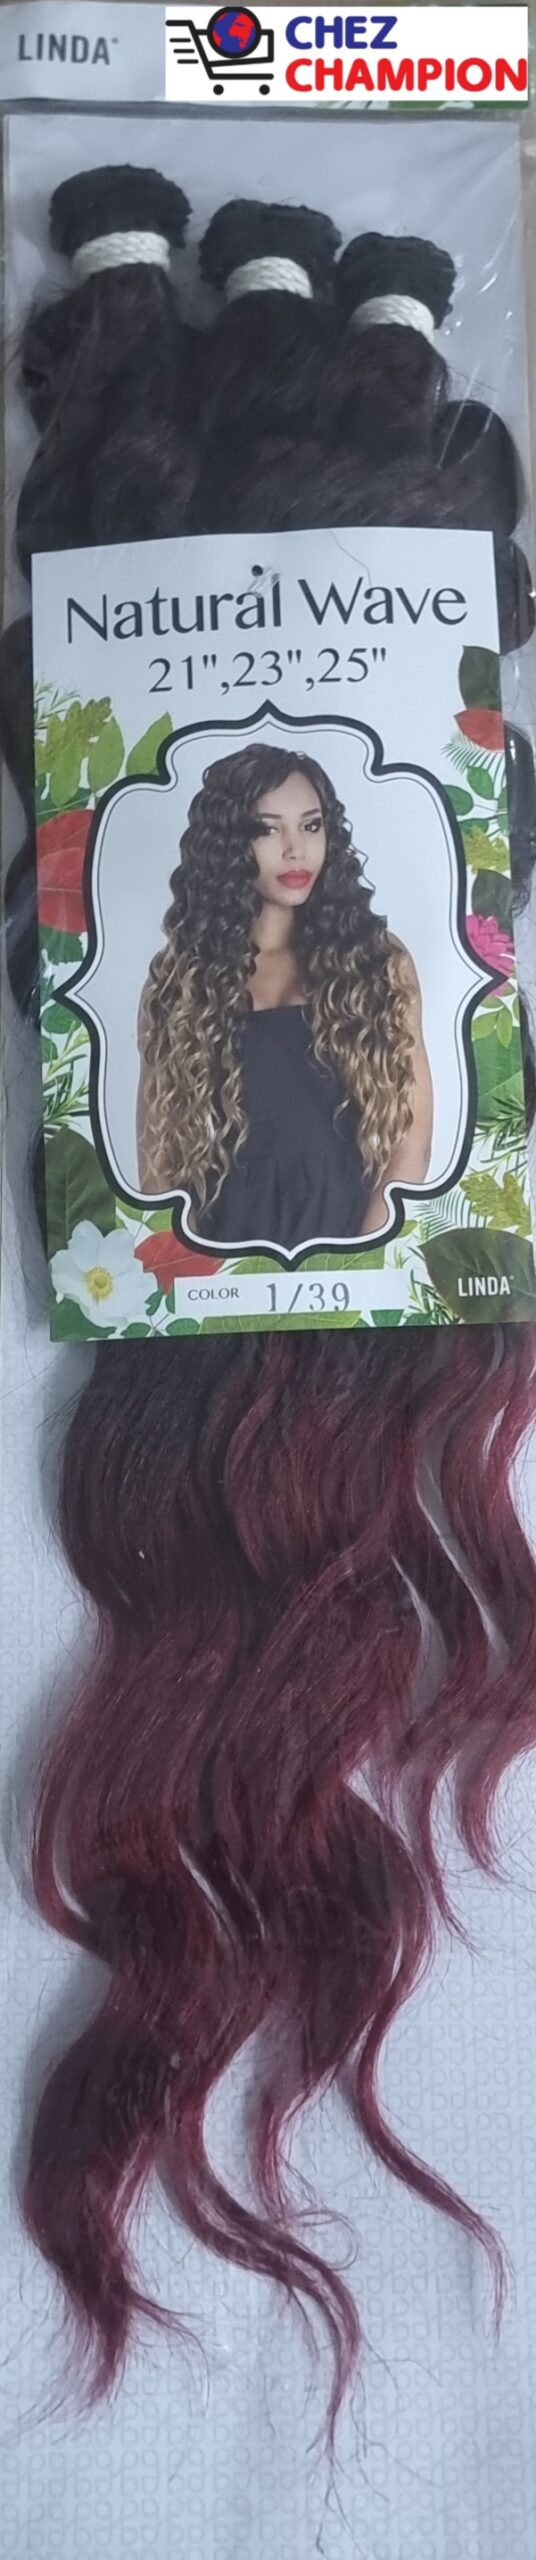 Linda natural wave 21″, 23″, 25″ – tissage – couleur 1/39